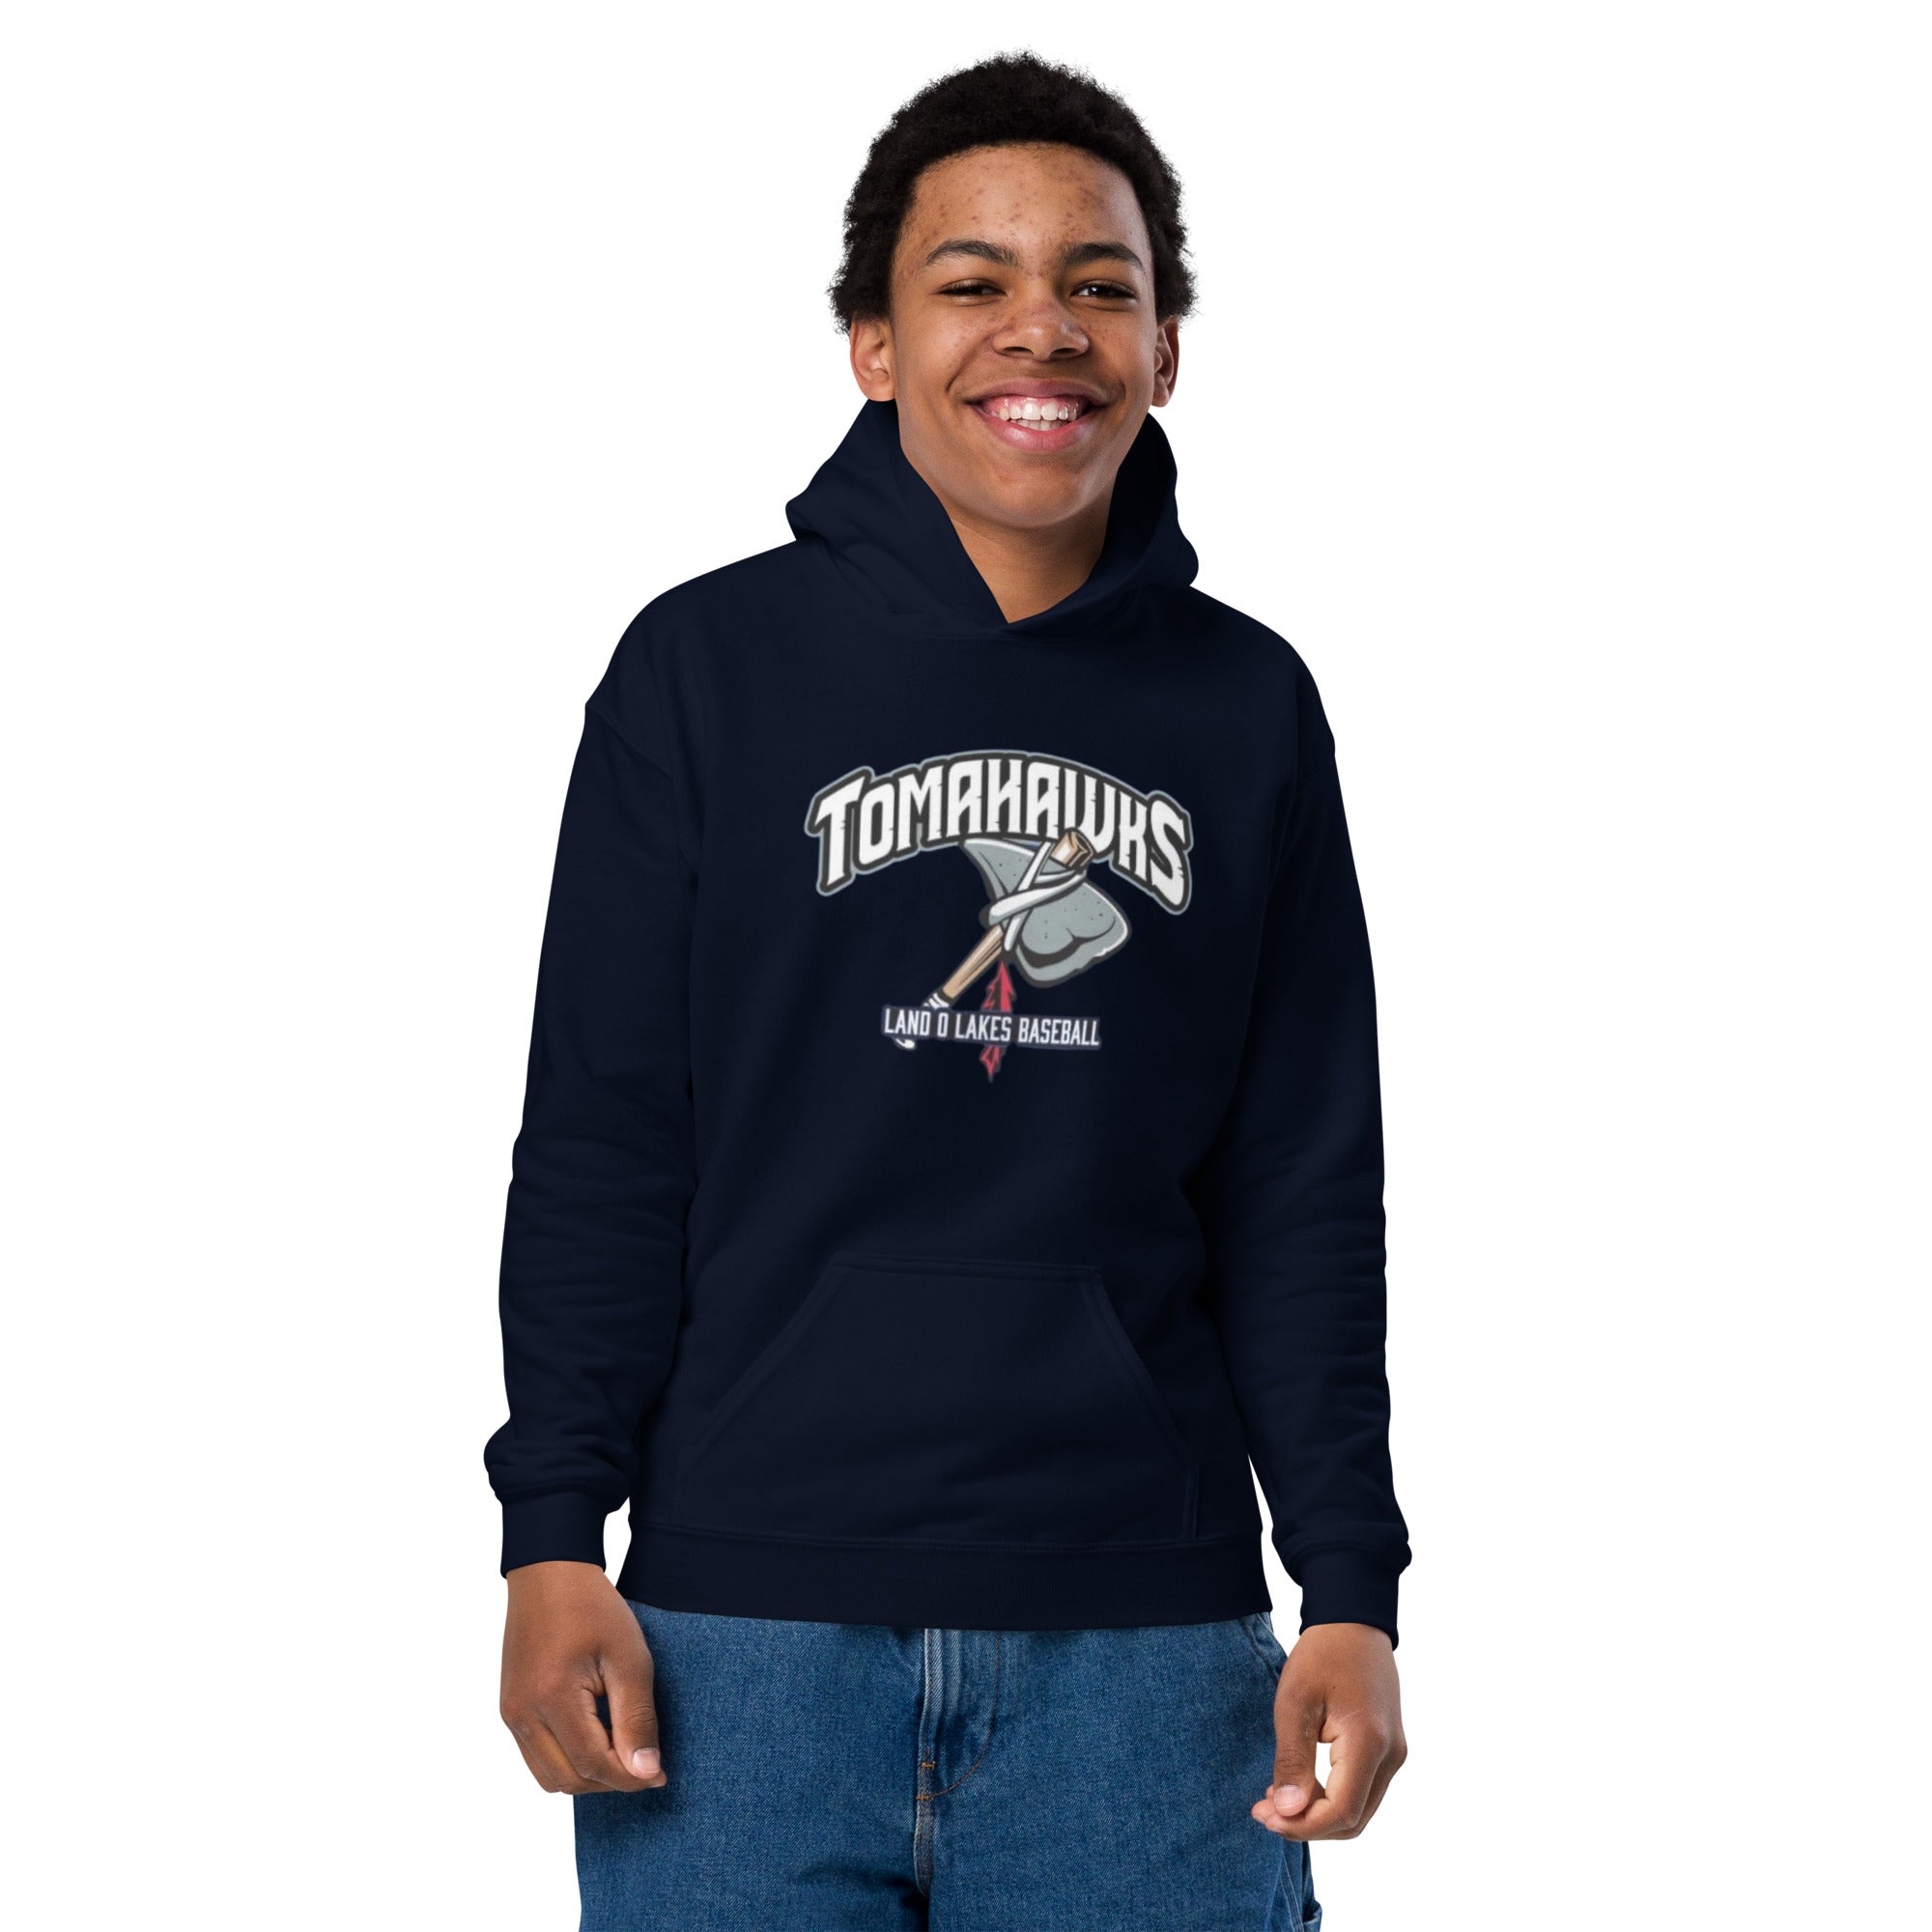 LOL Tomahawks Youth heavy blend hoodie